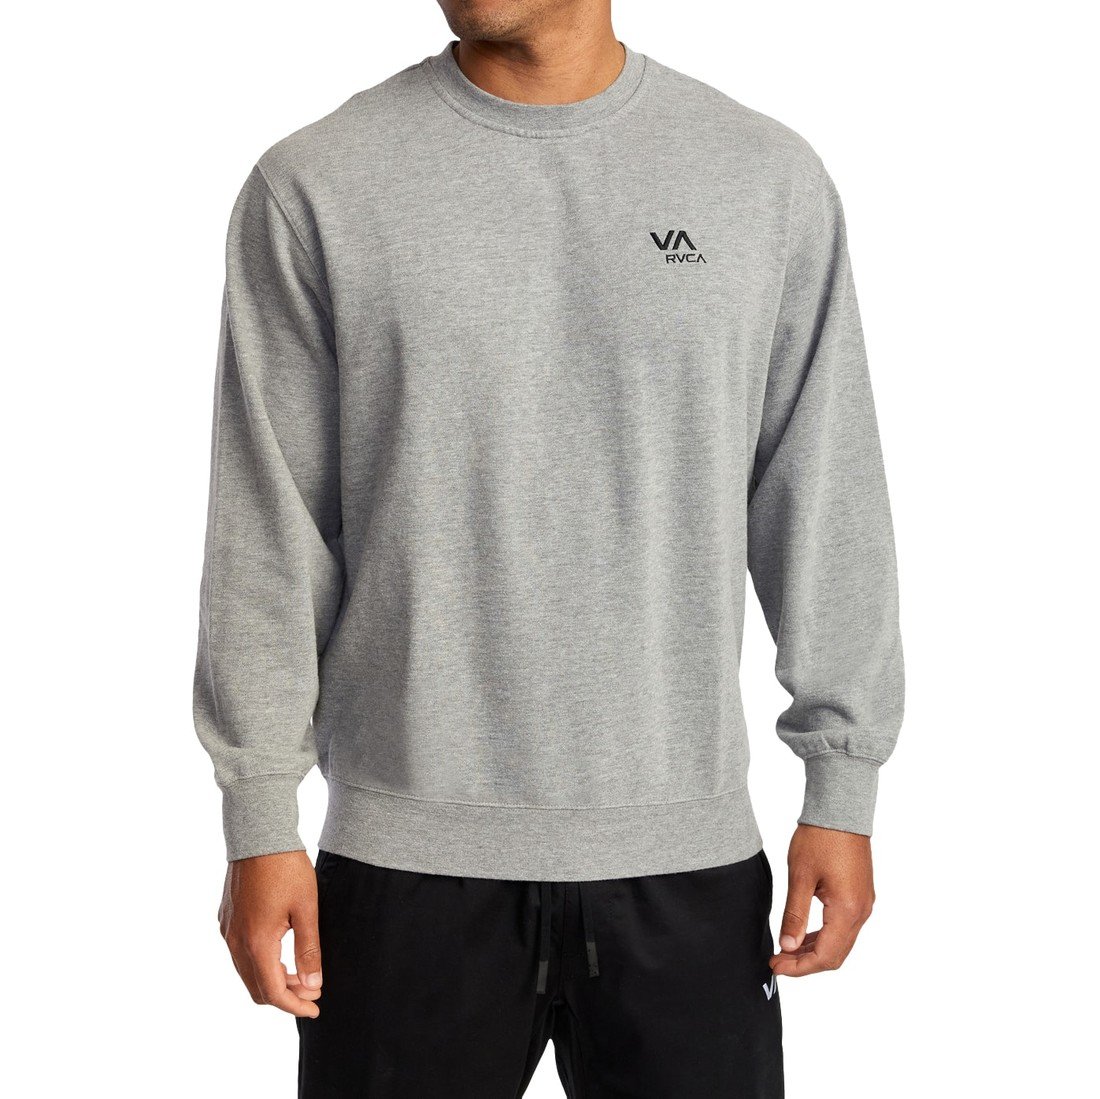 RVCA Va Essential Sweatshirt